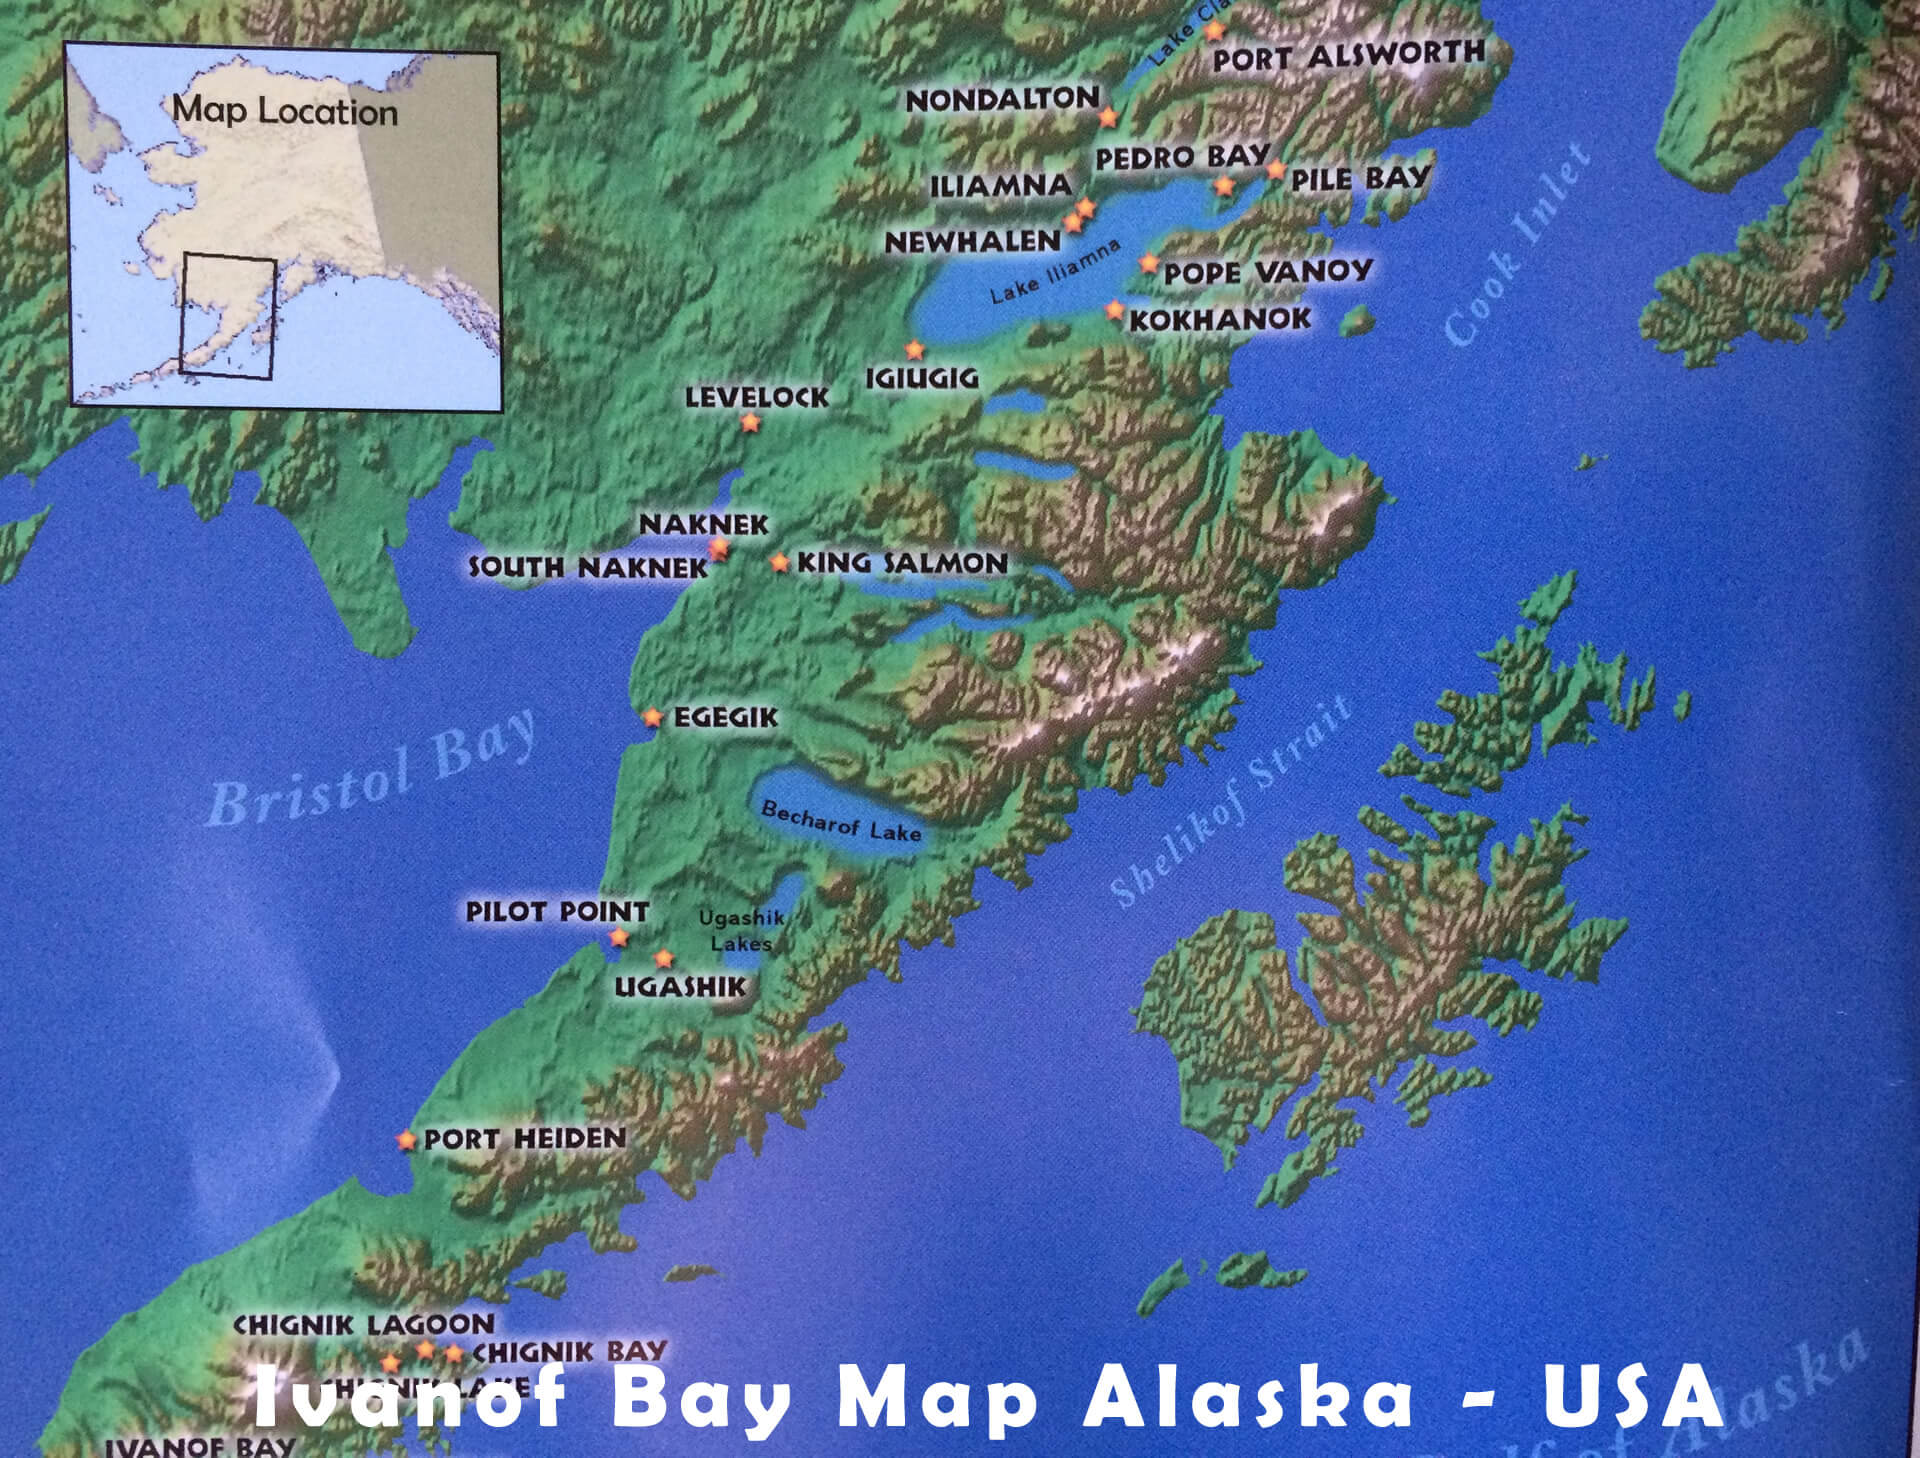 Ivanof Bay Map Alaska   USA